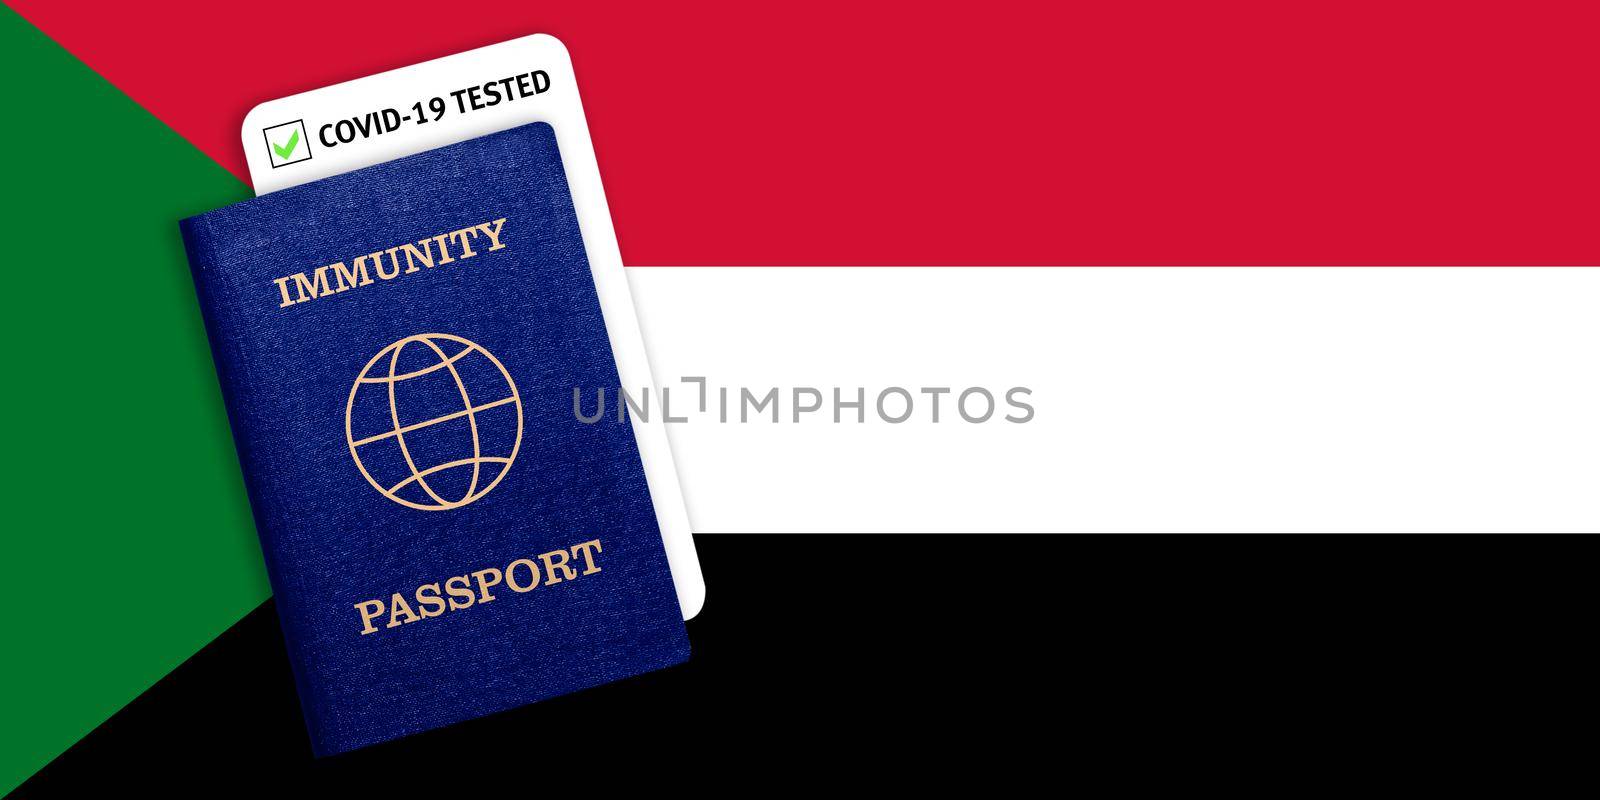 Immunity passport and test result for COVID-19 on flag of Sudan by galinasharapova